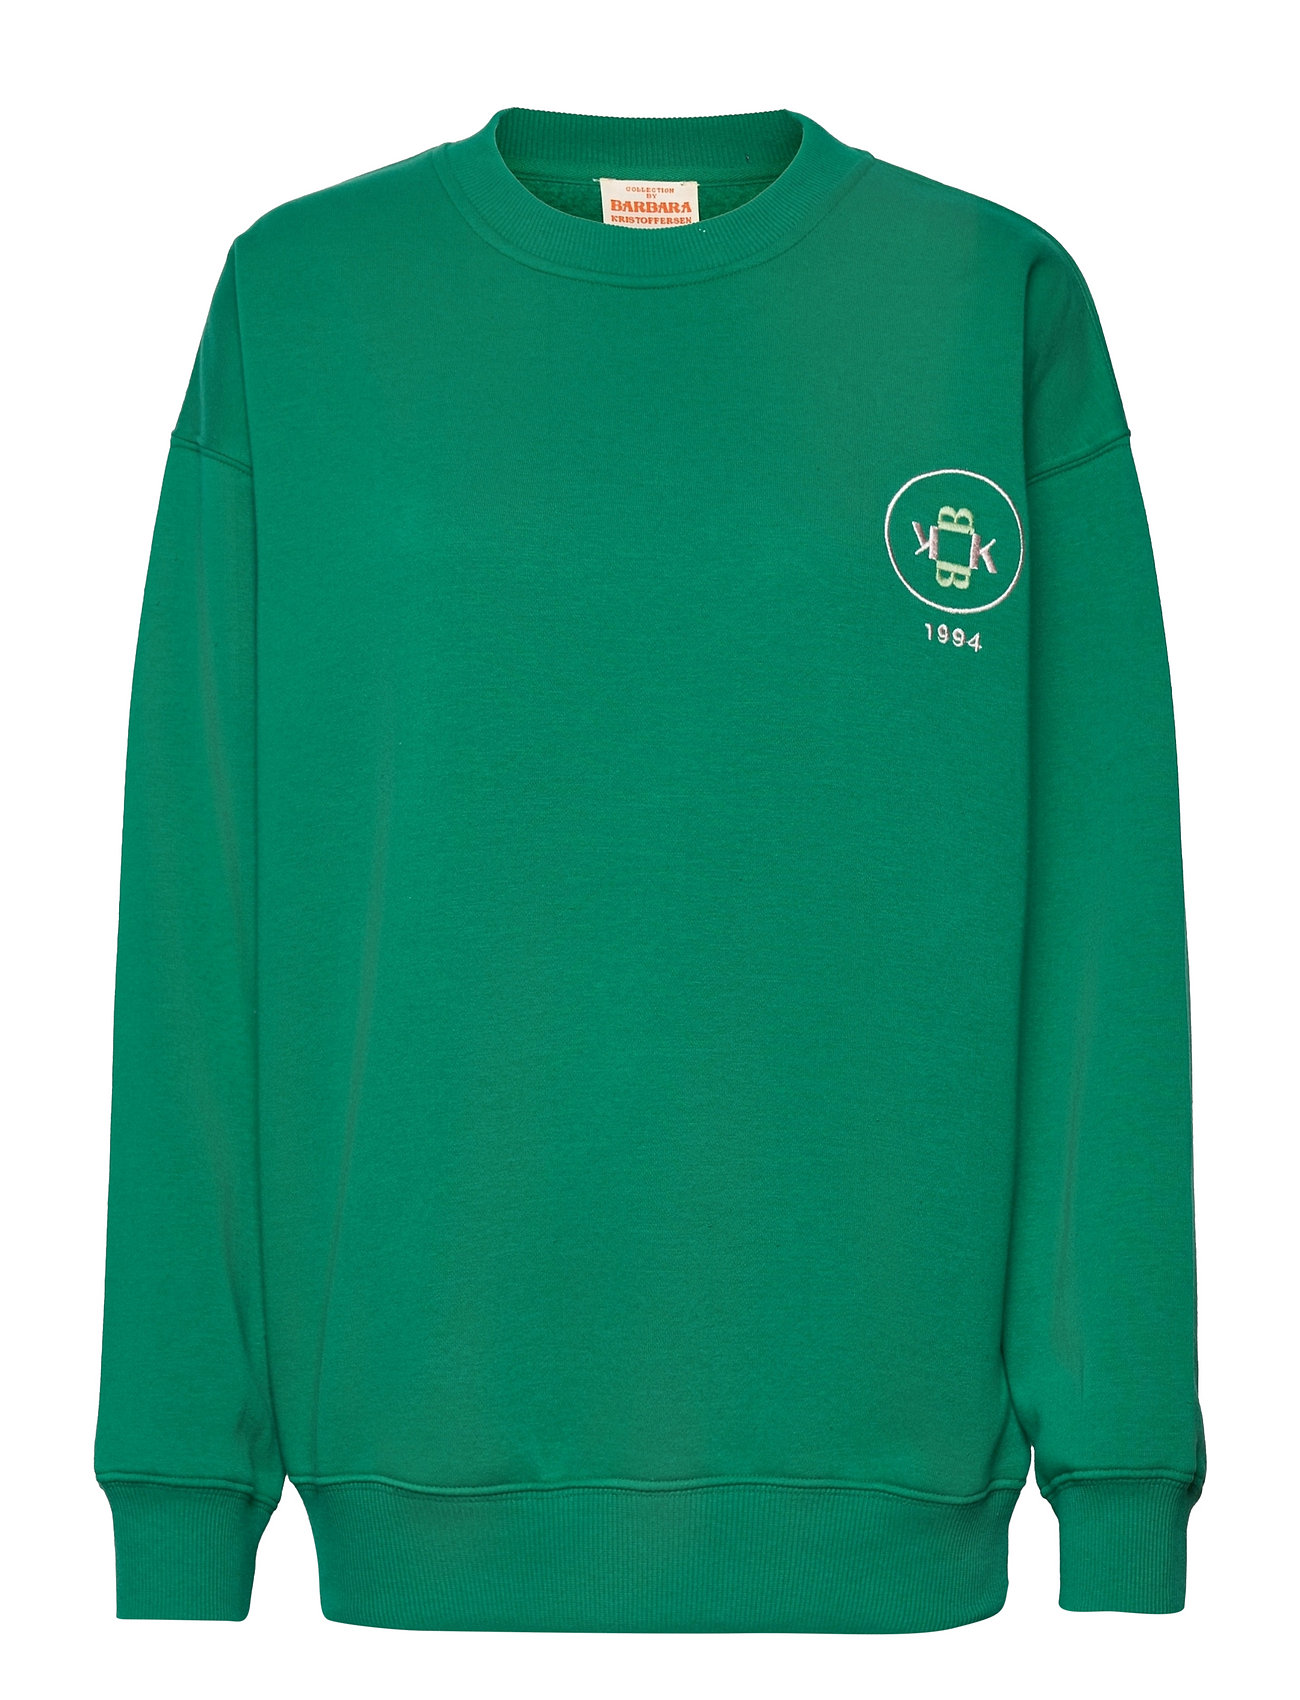 Sweatshirt Ls Tops Sweat-shirts & Hoodies Sweat-shirts Green Barbara Kristoffersen By Rosemunde